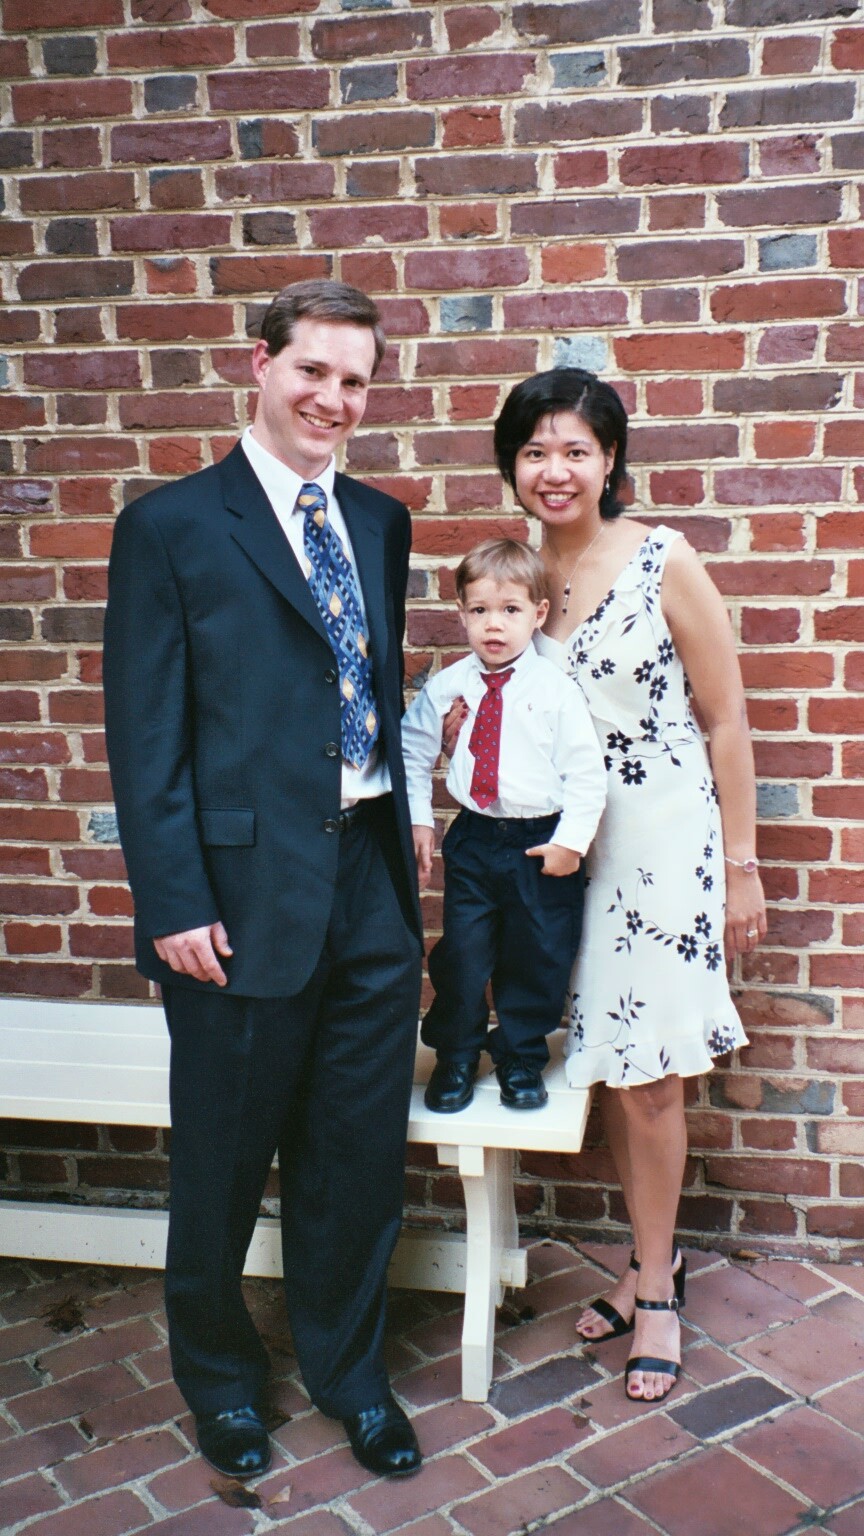 John, Ben, and Tricia at Beth Walters wedding